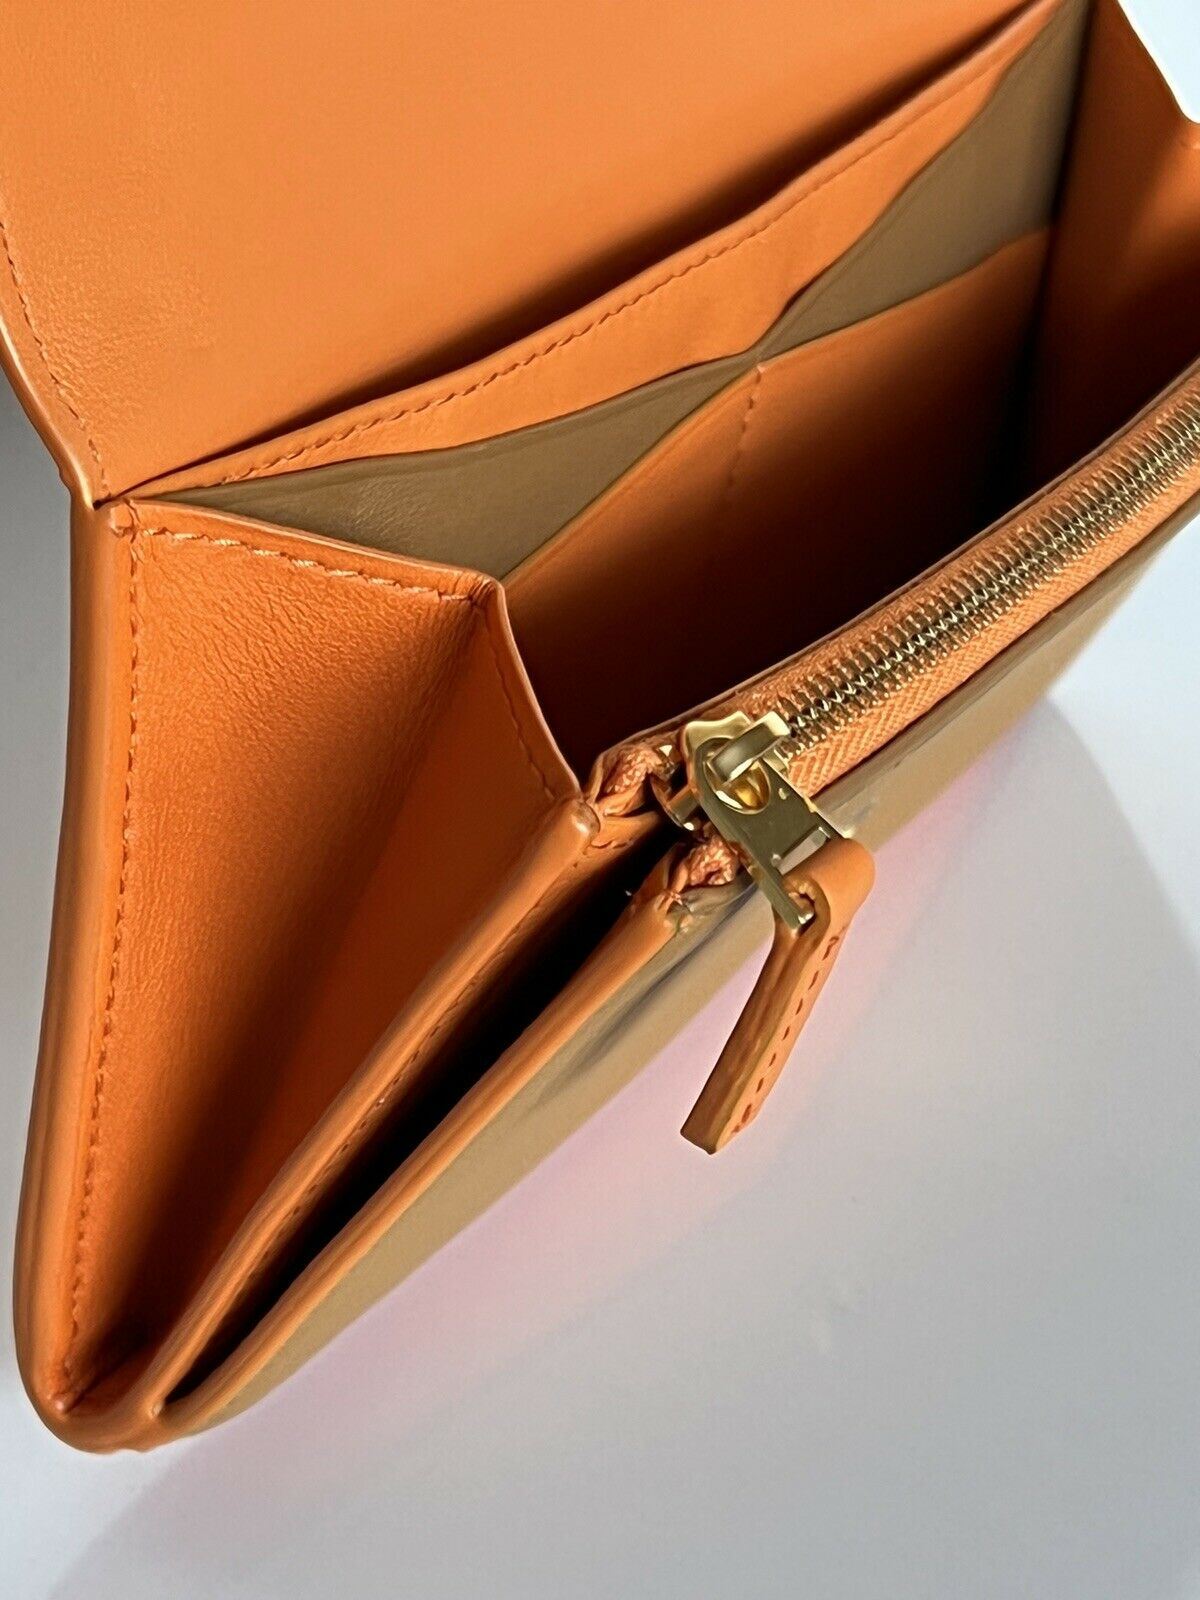 NWT $790 Кошелек Bottega Veneta Leather Continental Light Orange/Caramel 608260 